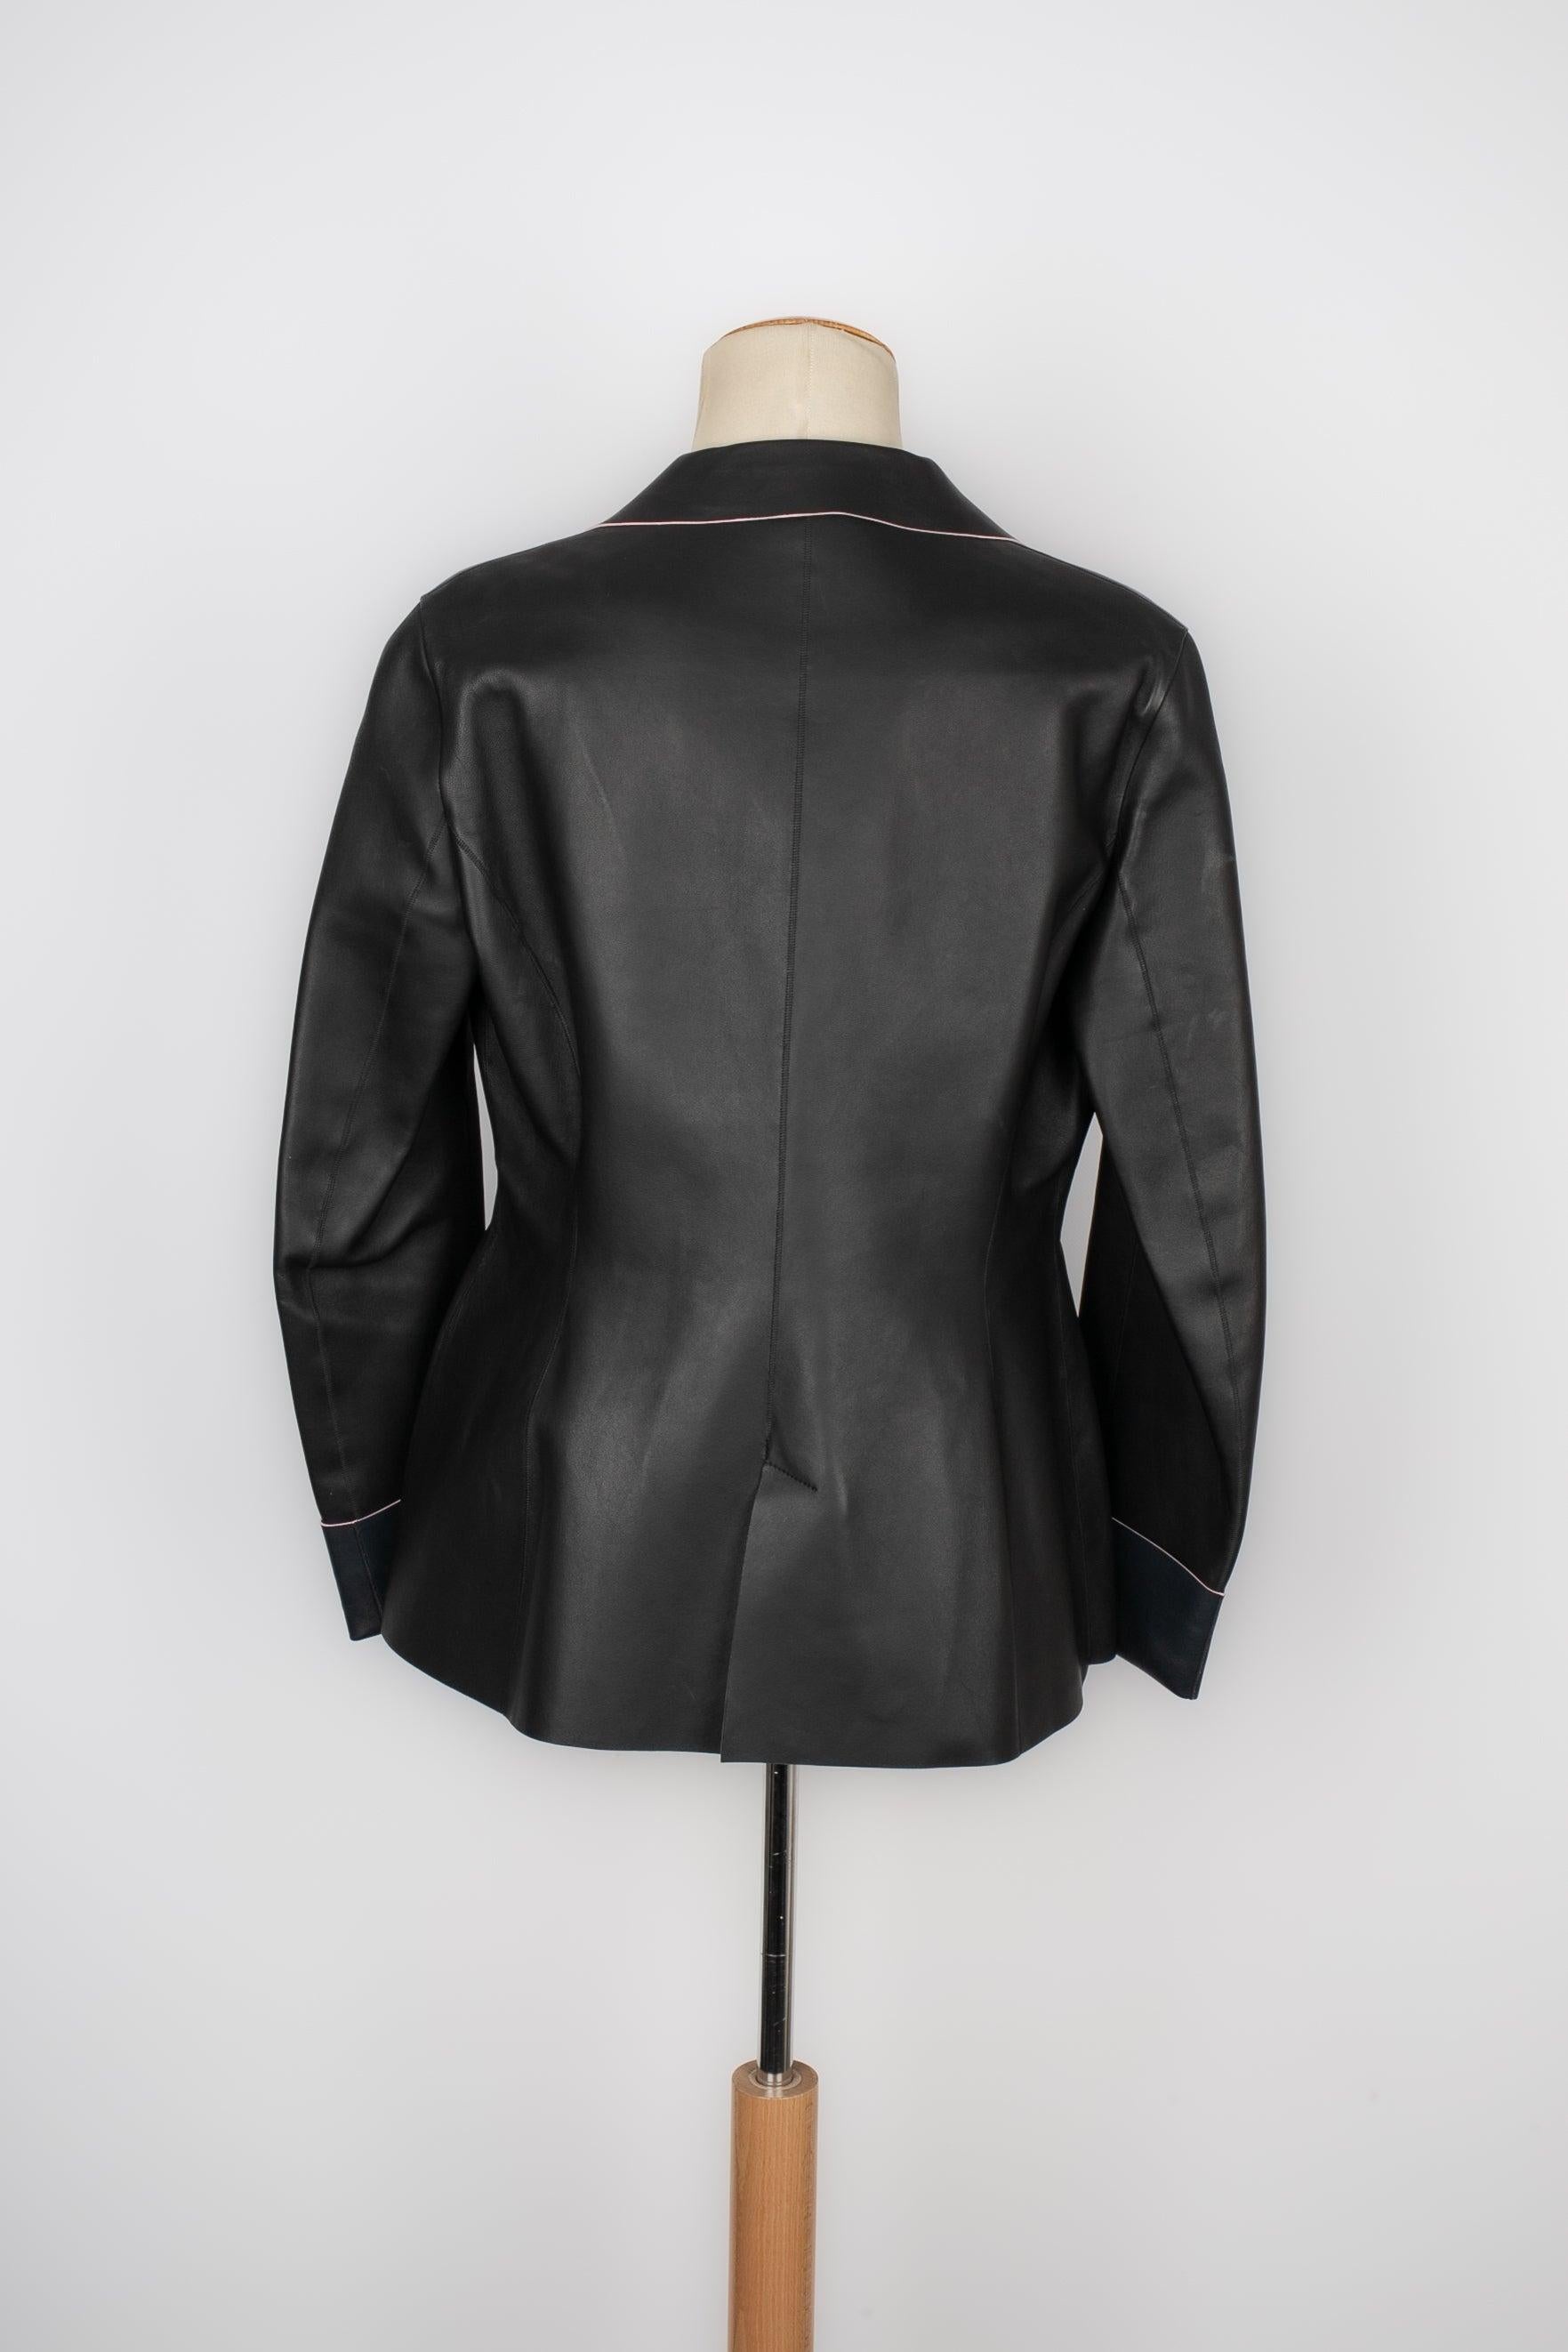 Christian Dior Black Lamb Leather Jacket In Excellent Condition For Sale In SAINT-OUEN-SUR-SEINE, FR